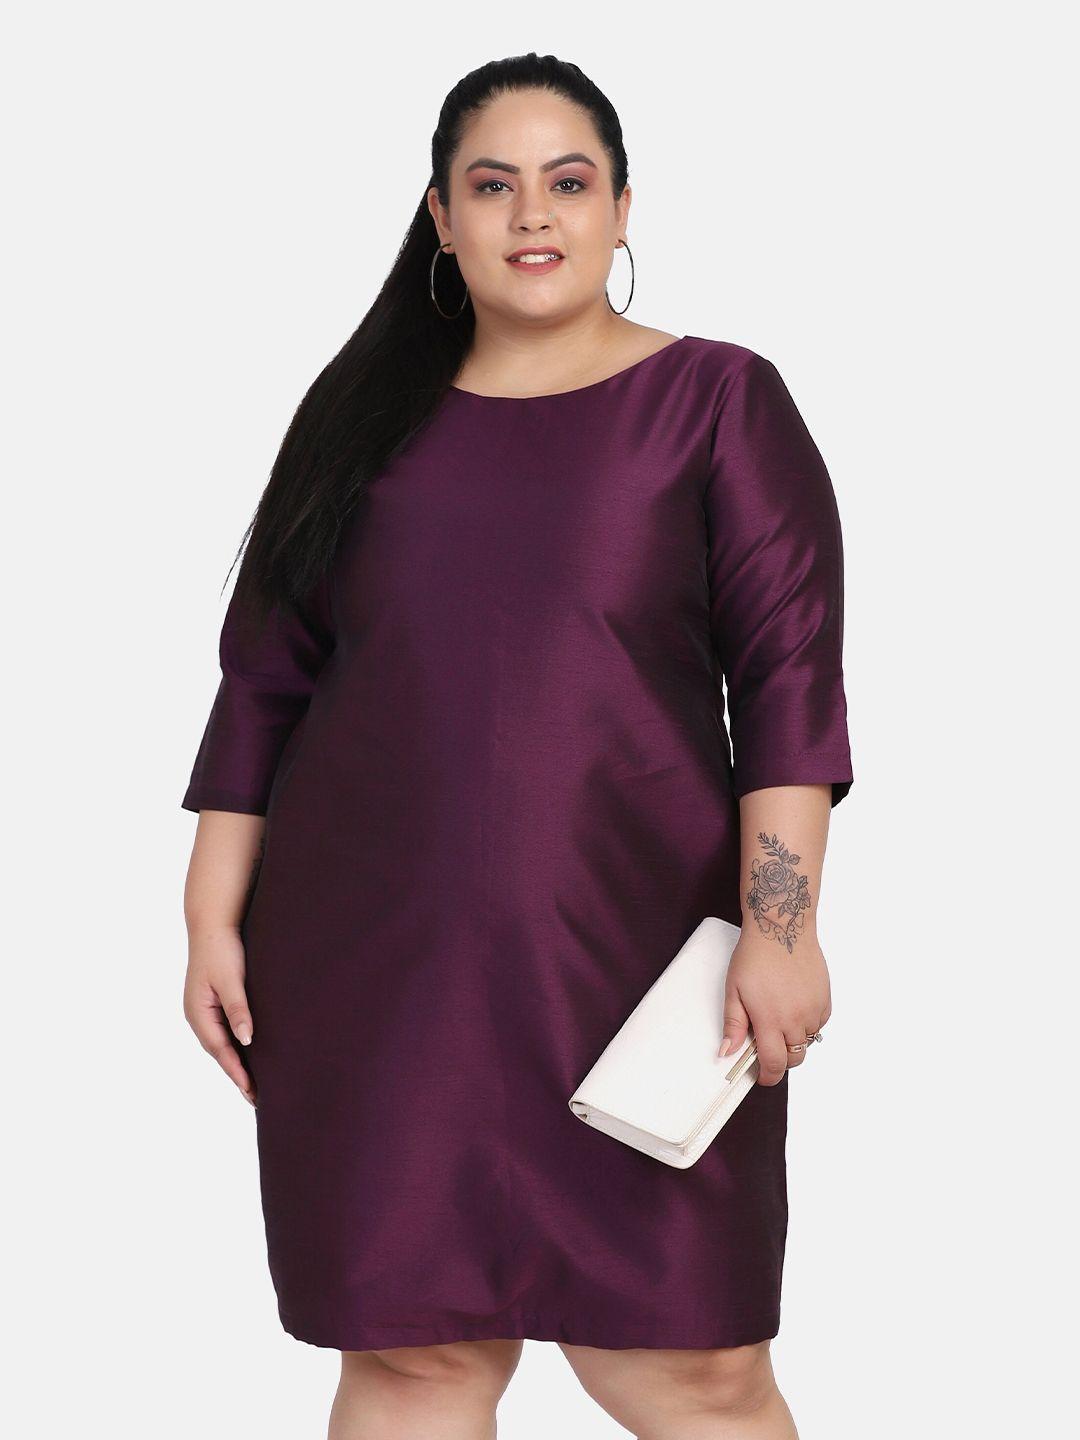 powersutra womens purple plus size bodycon dress